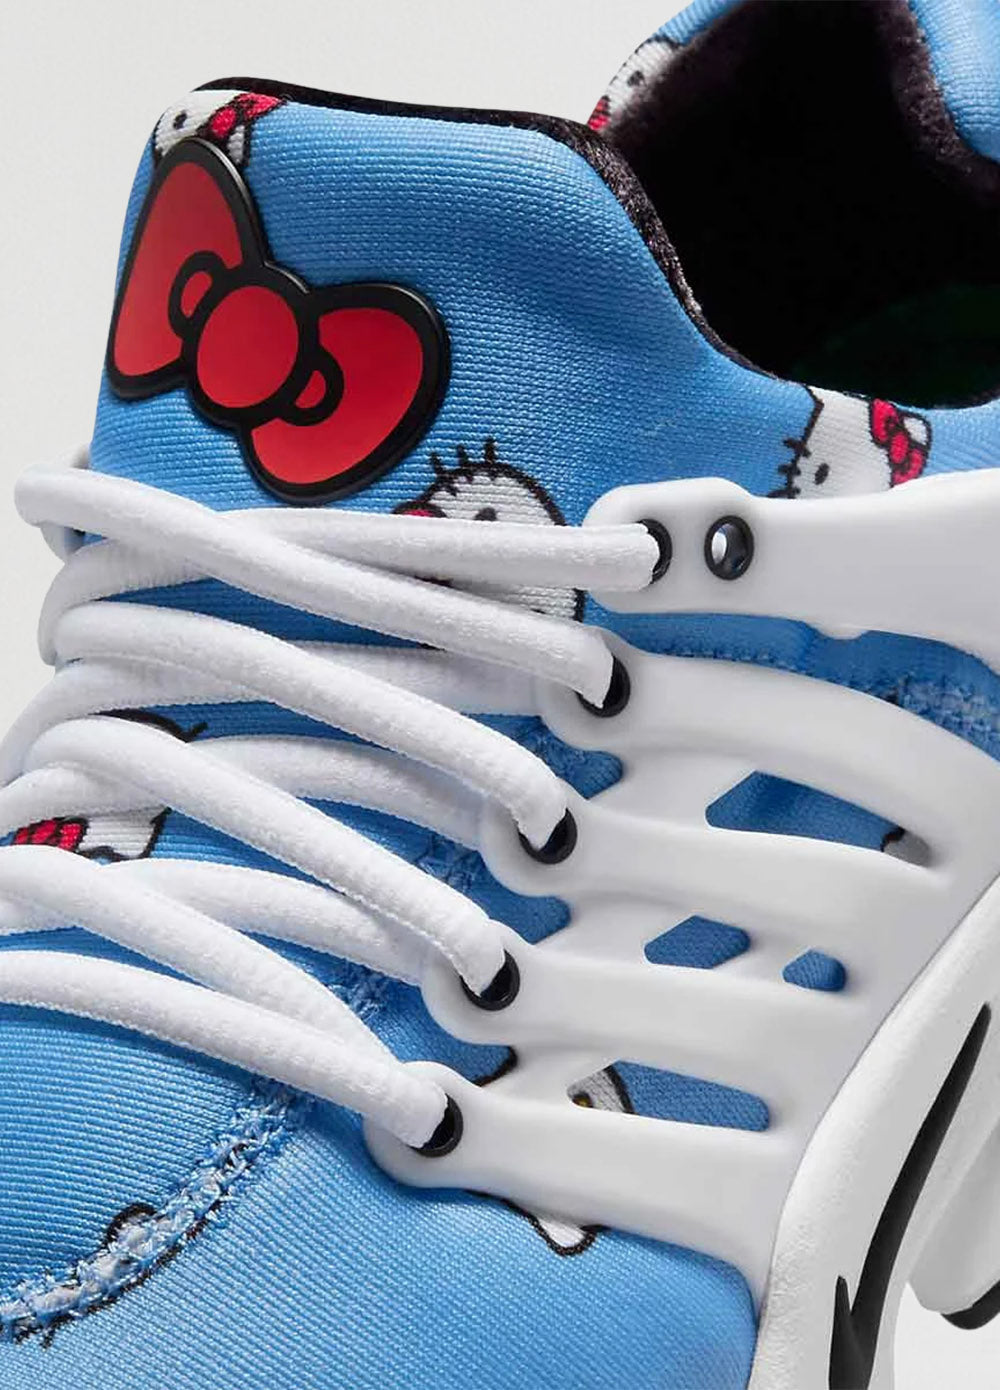 Air Presto QS Hello Kitty Sneakers